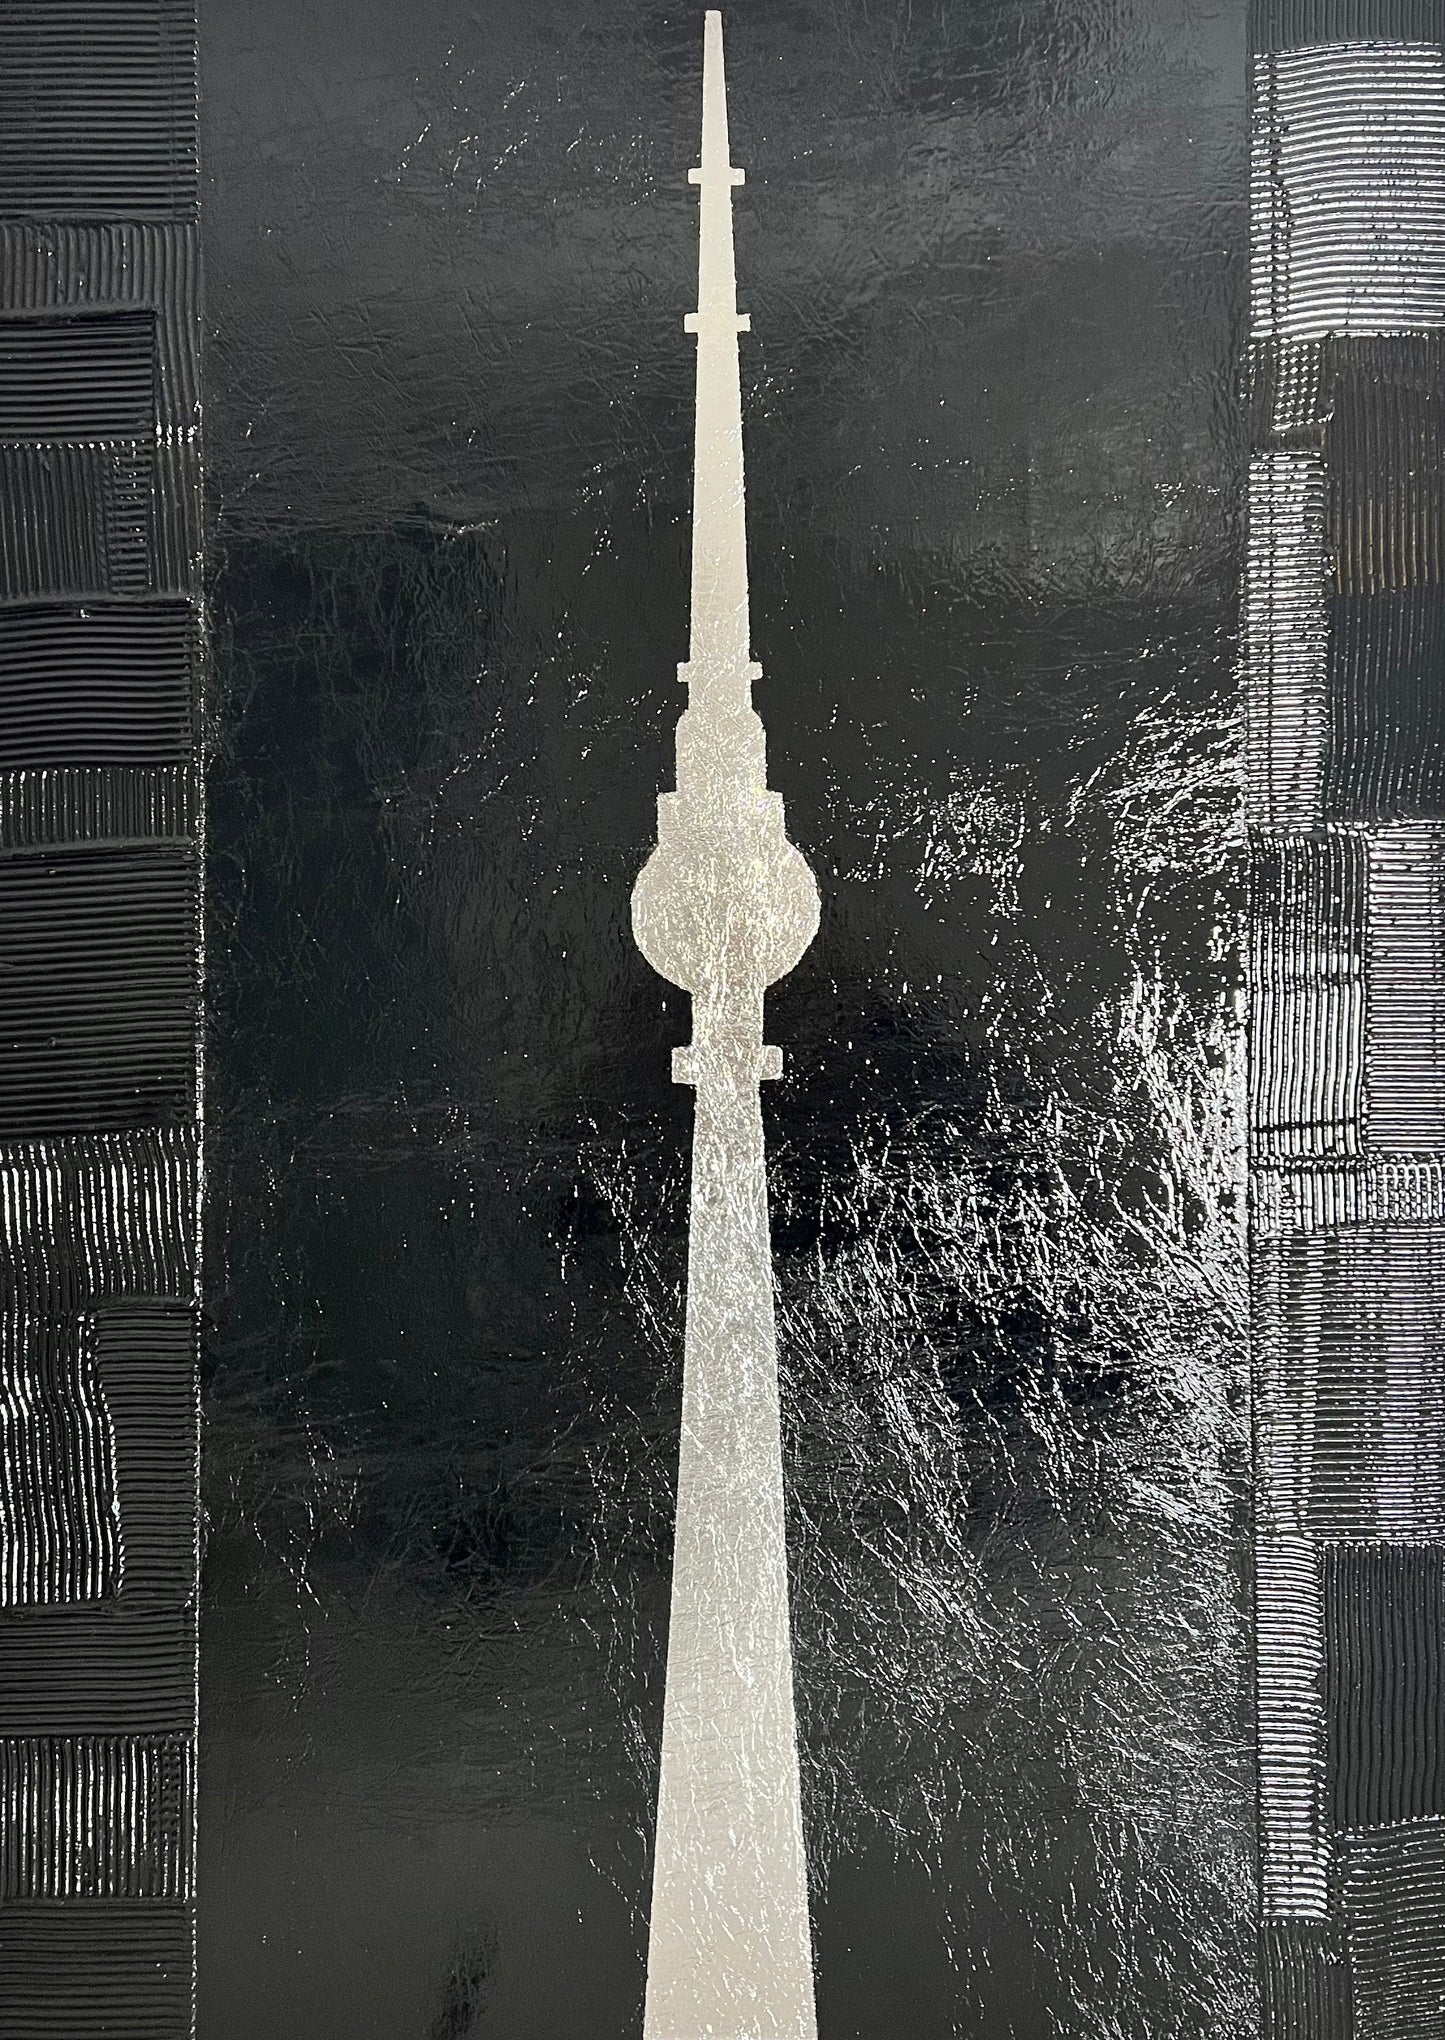 "Berliner Fernsehturm" Artwork by Nyra Turkmani